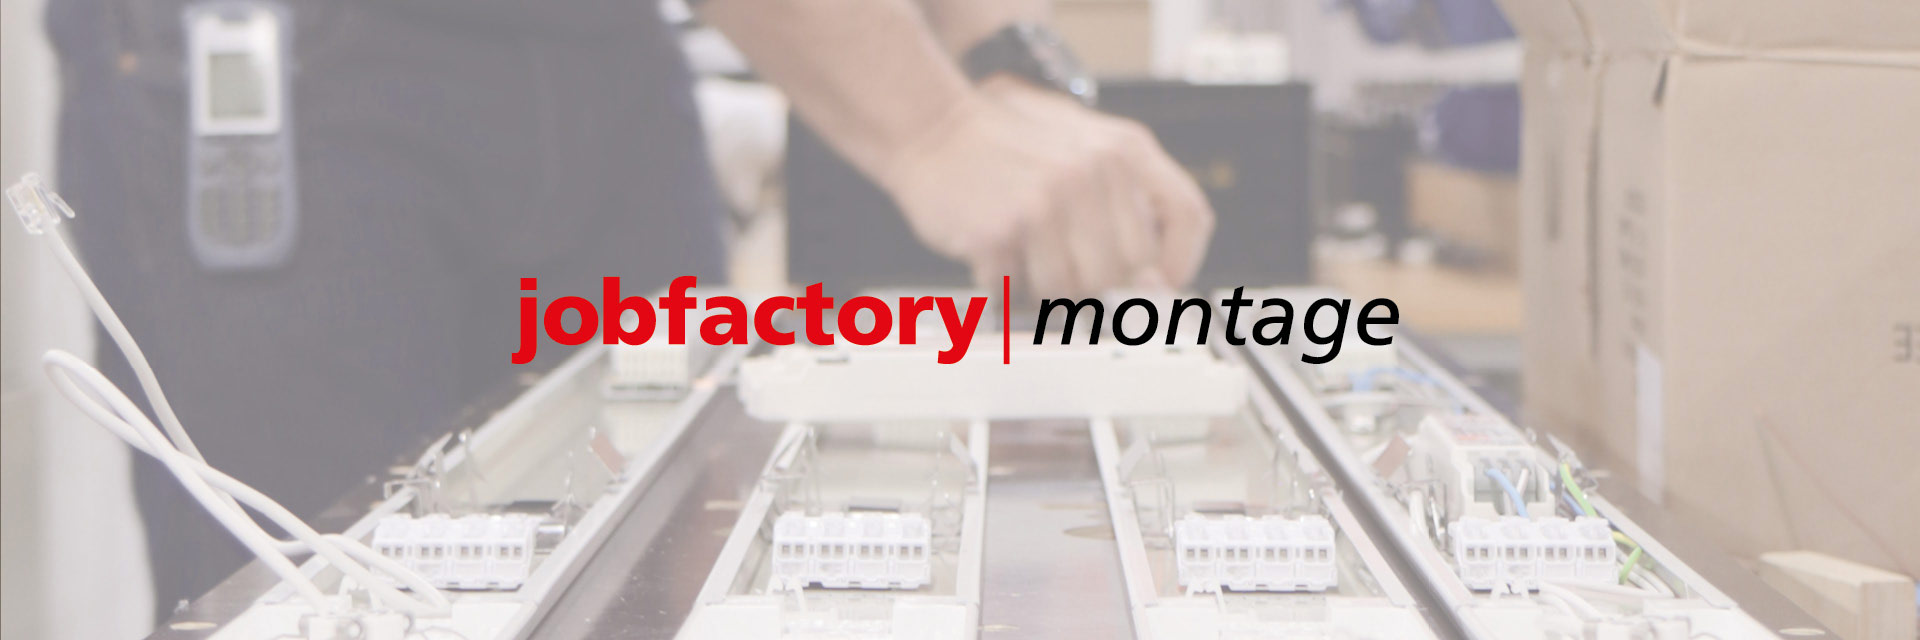 Jobfactory Montage